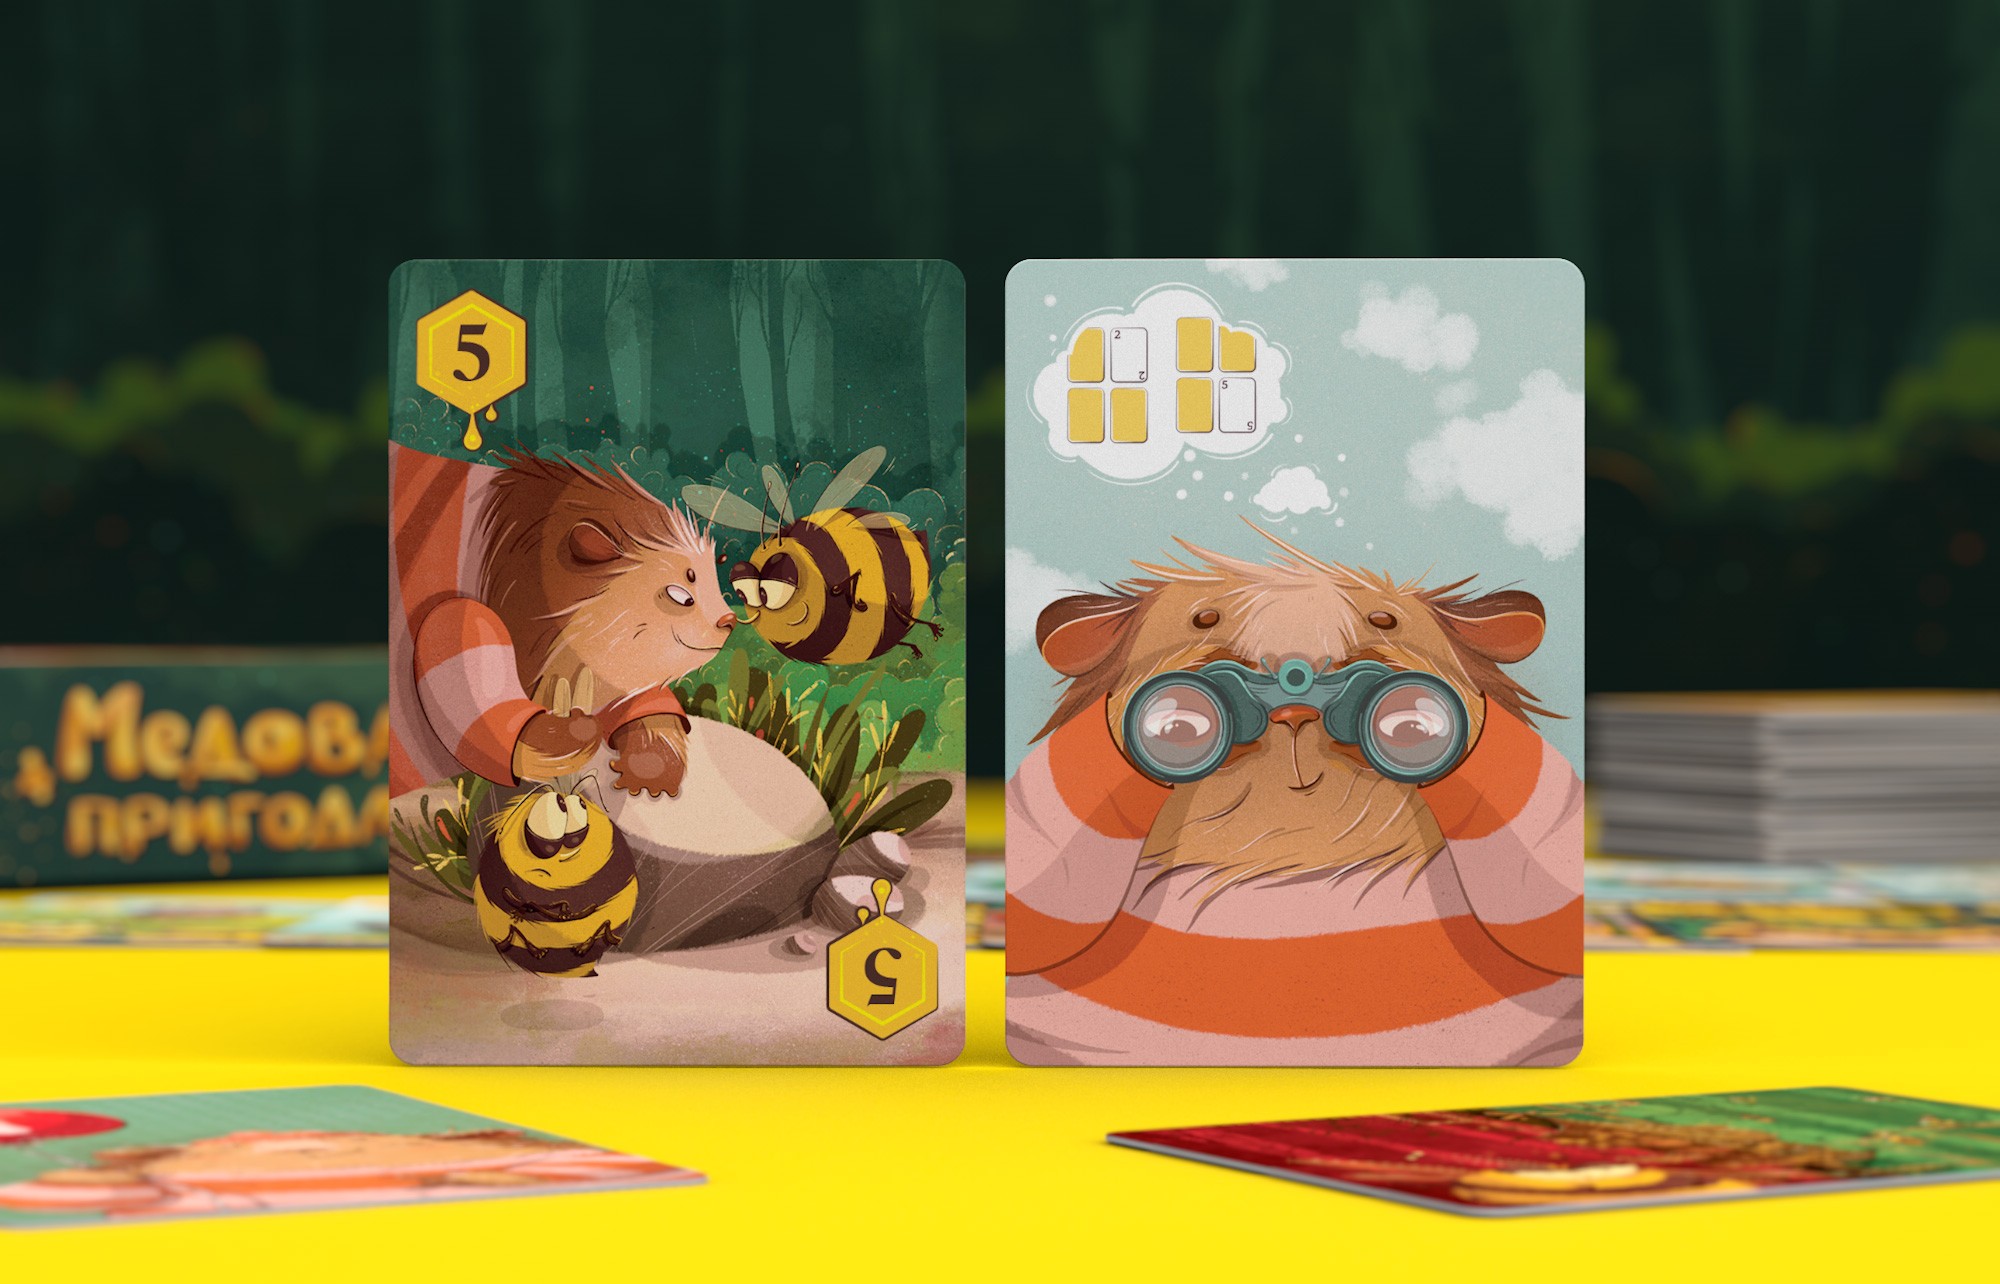 Настільна гра Медова пригода (Honey adventure), бренду Geekach Games, для 2-6 гравців, час гри < 30хв. - 6 - KUBIX 